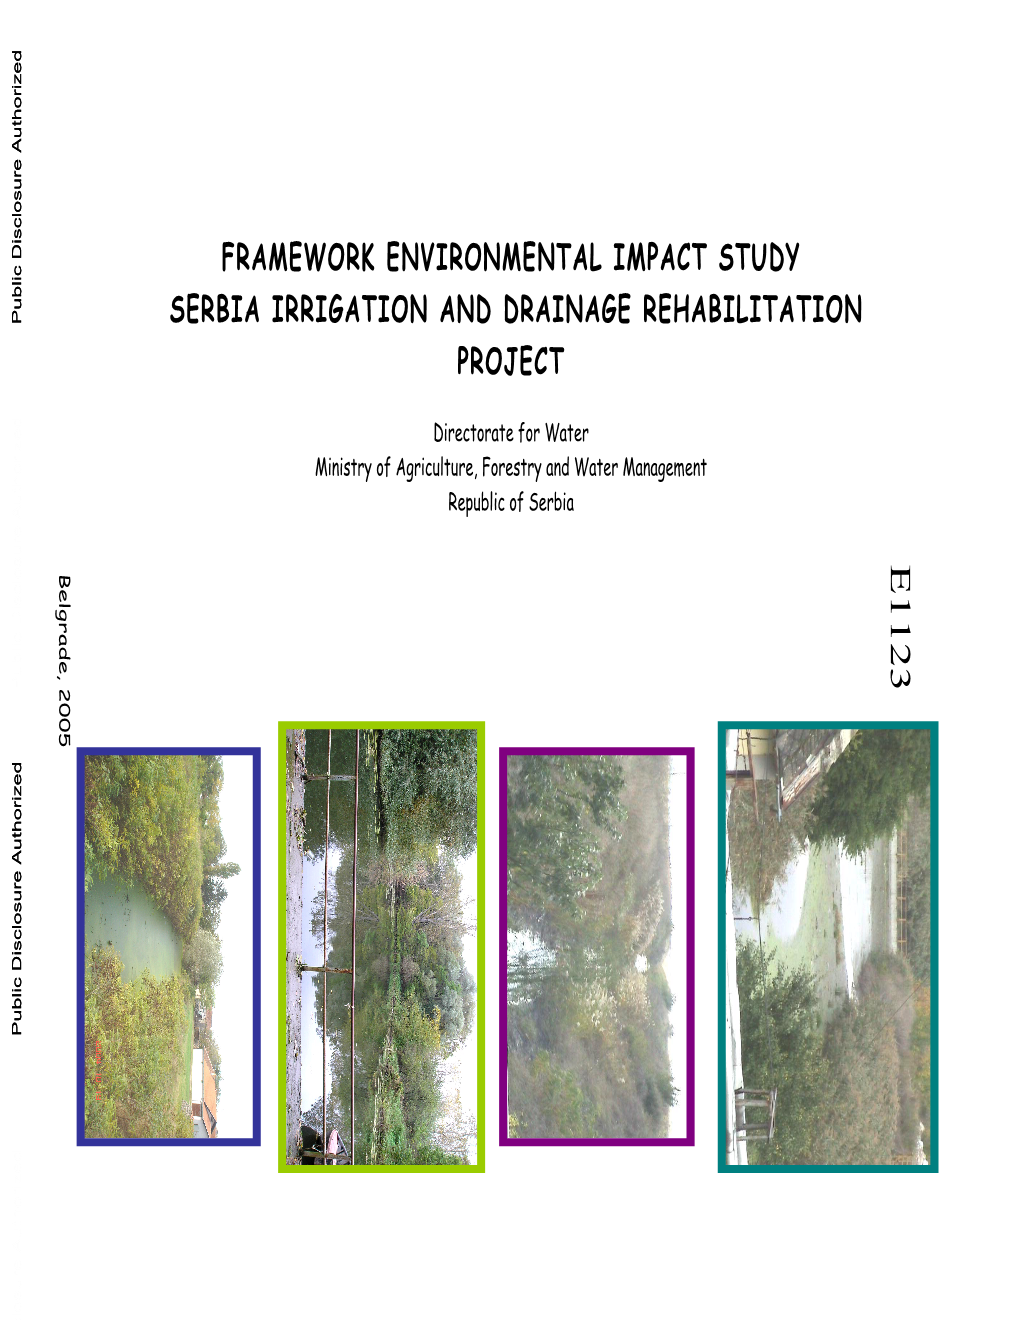 Framework Environmental Impact Study Serbia Irrigation and Drainage Rehabilitation Project